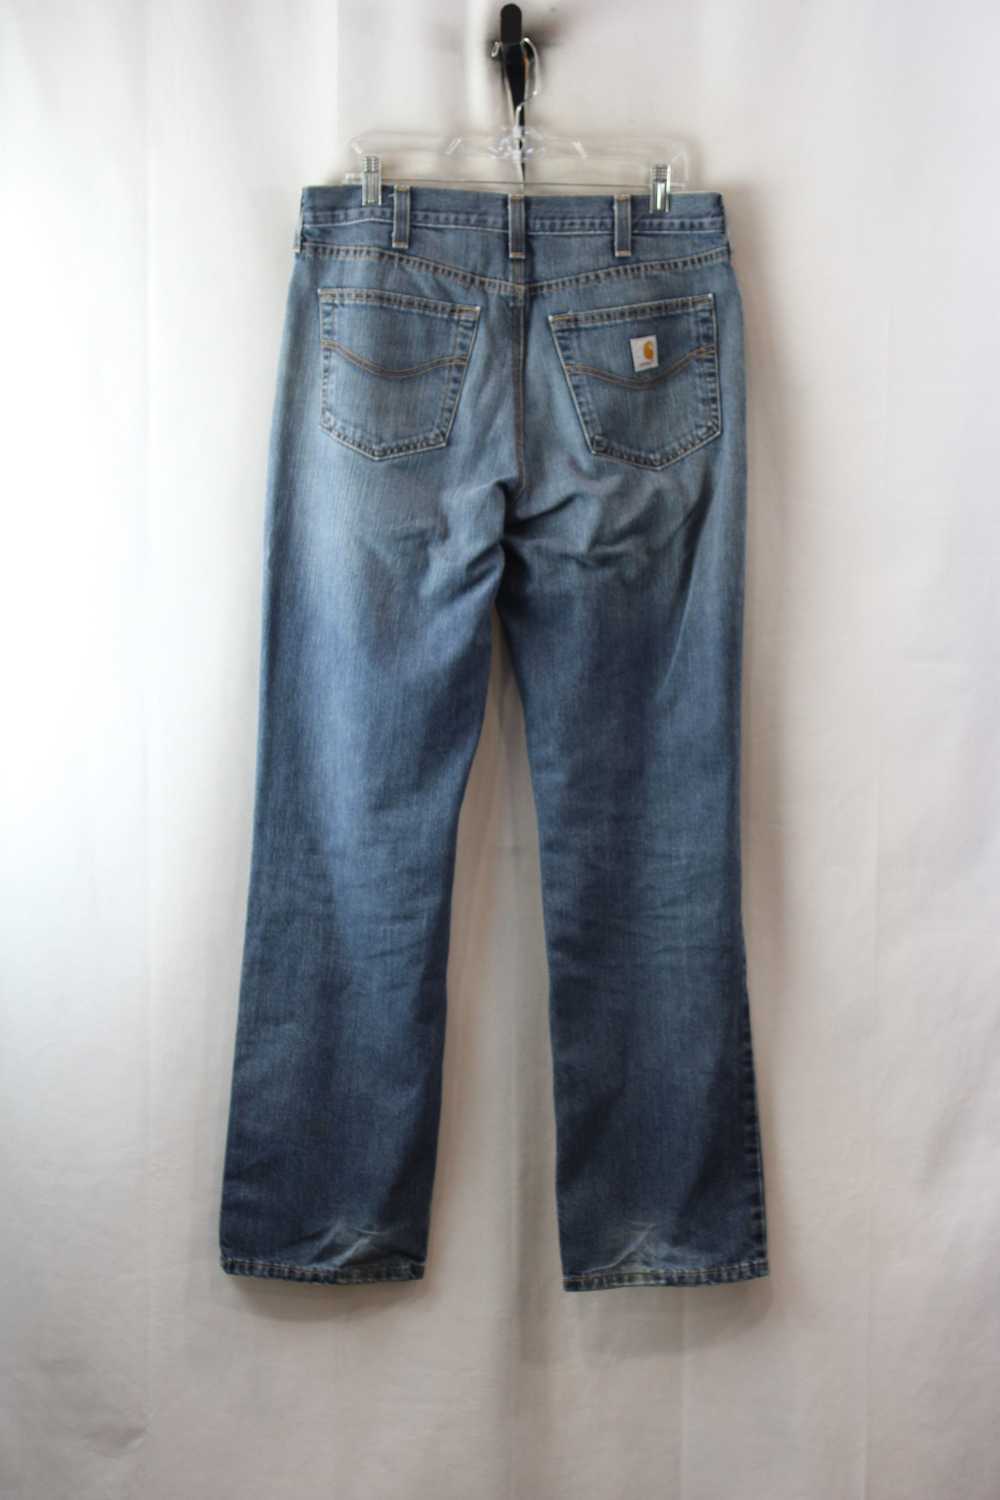 Carhartt Men's Blue Straight Jeans sz 33x34 - image 2